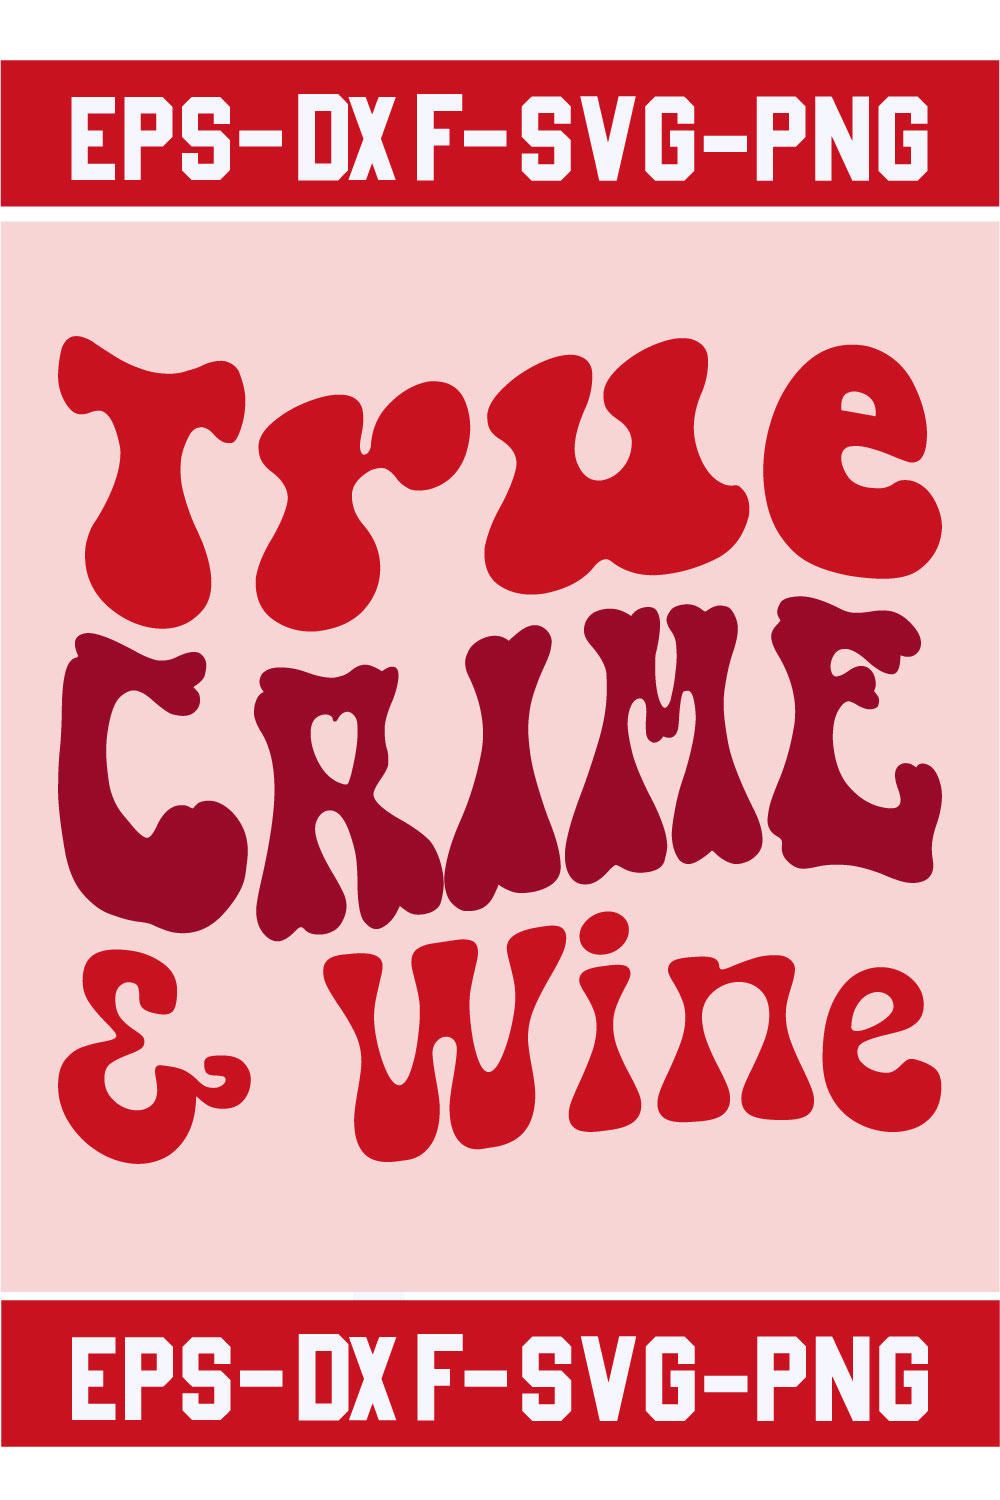 True Crime & Wine pinterest preview image.